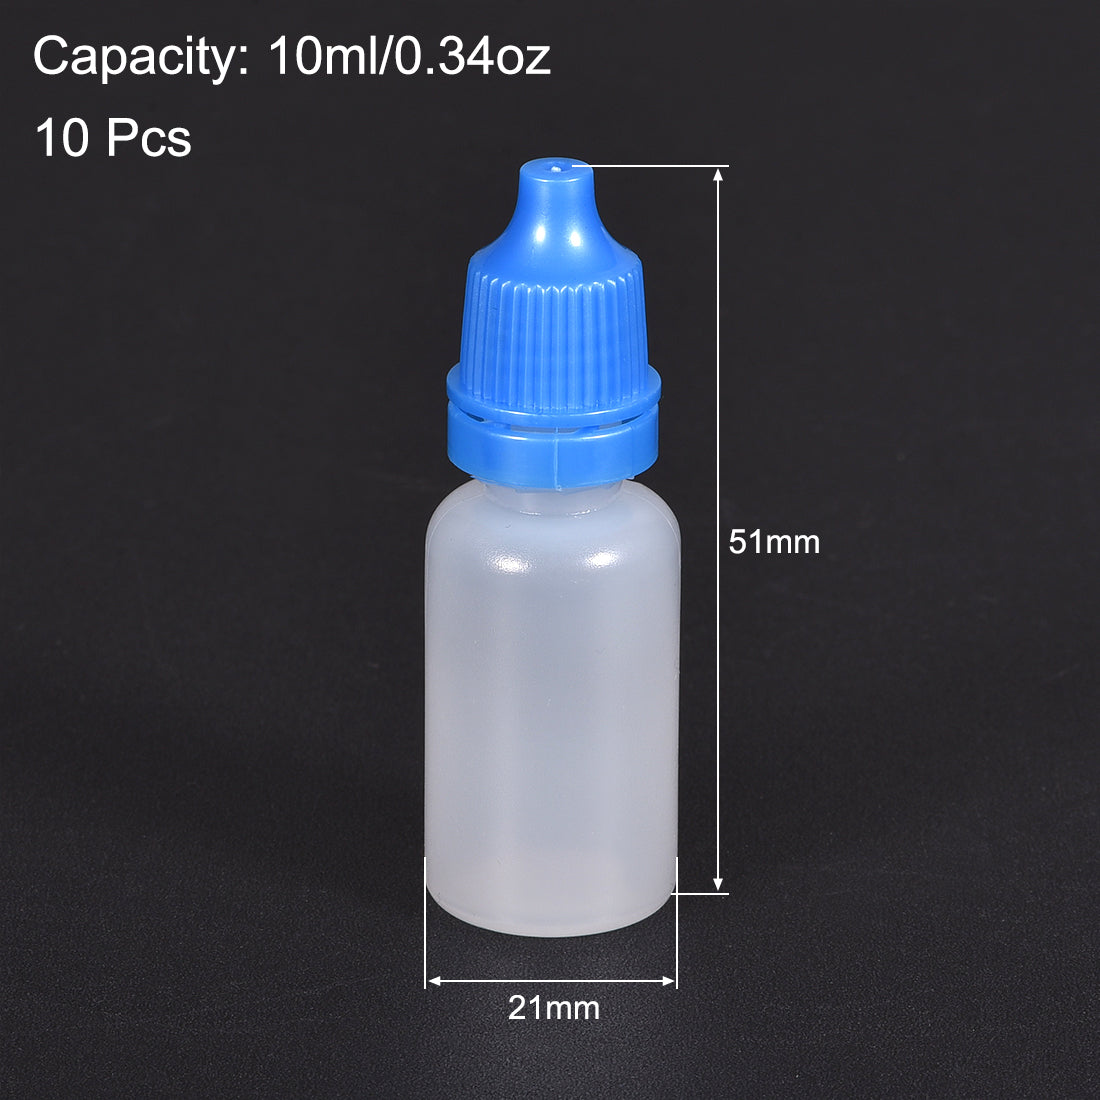 uxcell Uxcell 10ml/0.34 oz Empty Squeezable Dropper Bottle Blue 10pcs